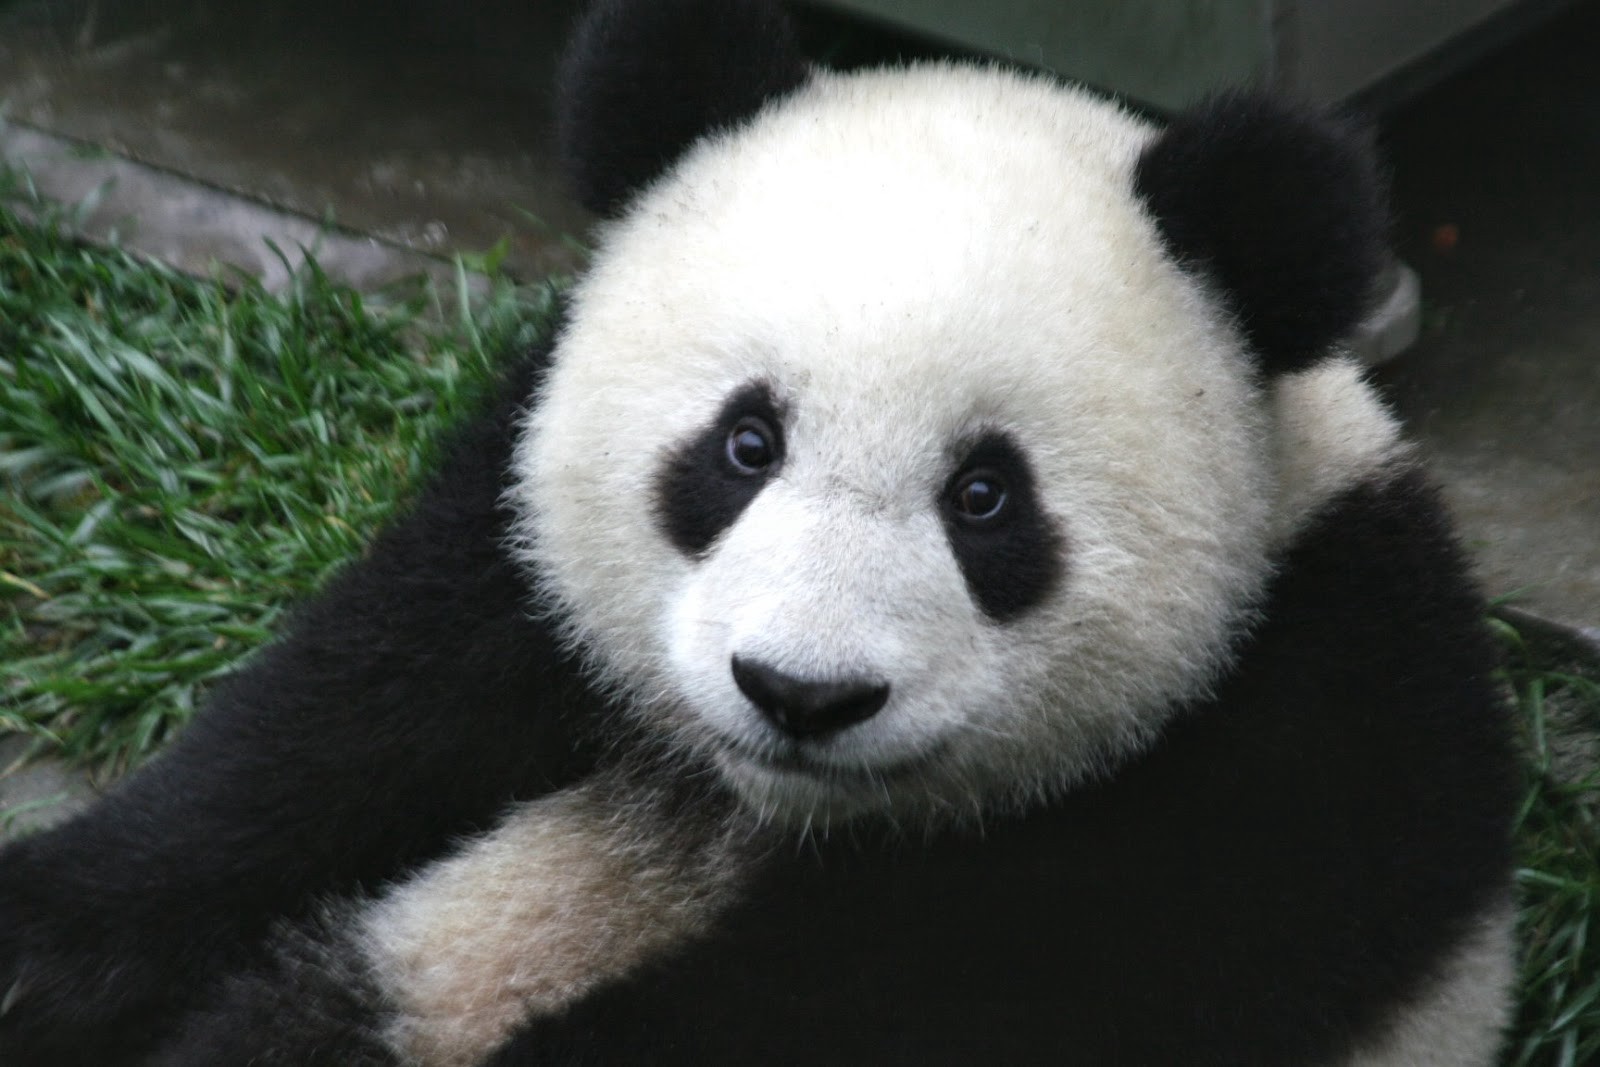 Meet Leo, the panda.